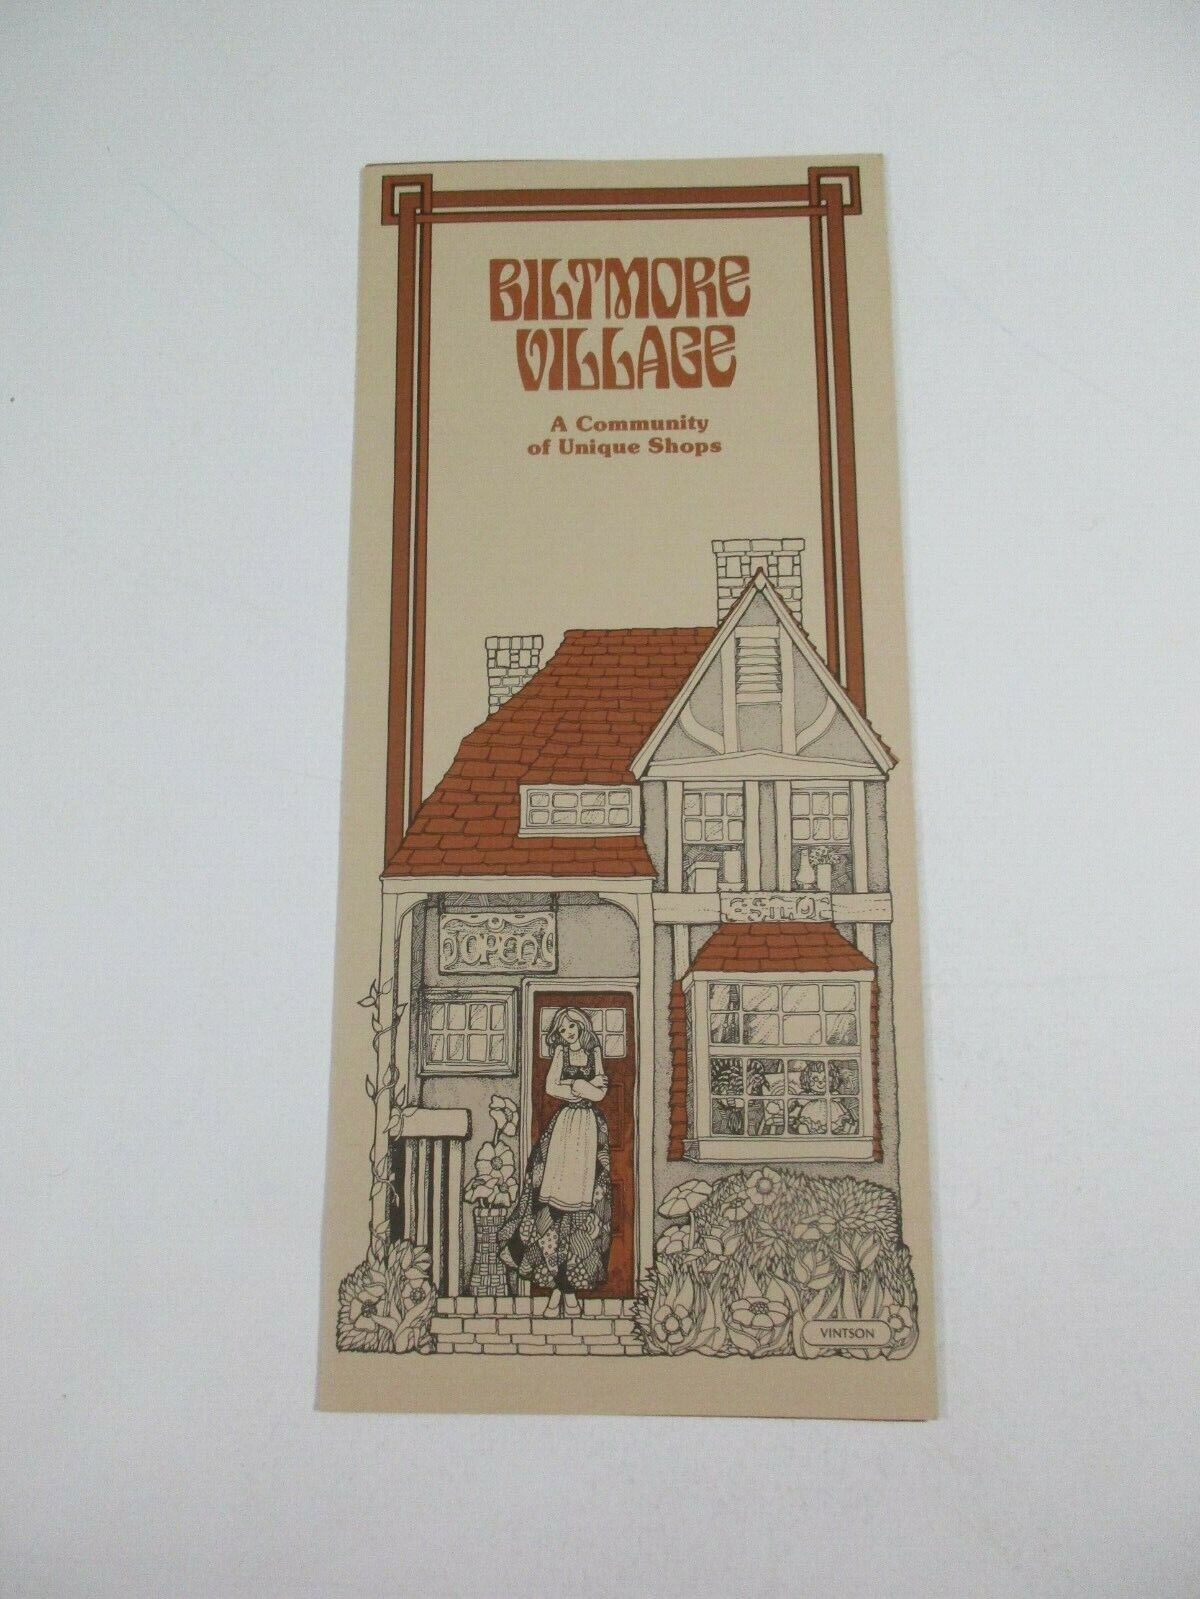 Vintage Biltmore Village Unique Shops Nc Travel Brochure Guide & Map-br1